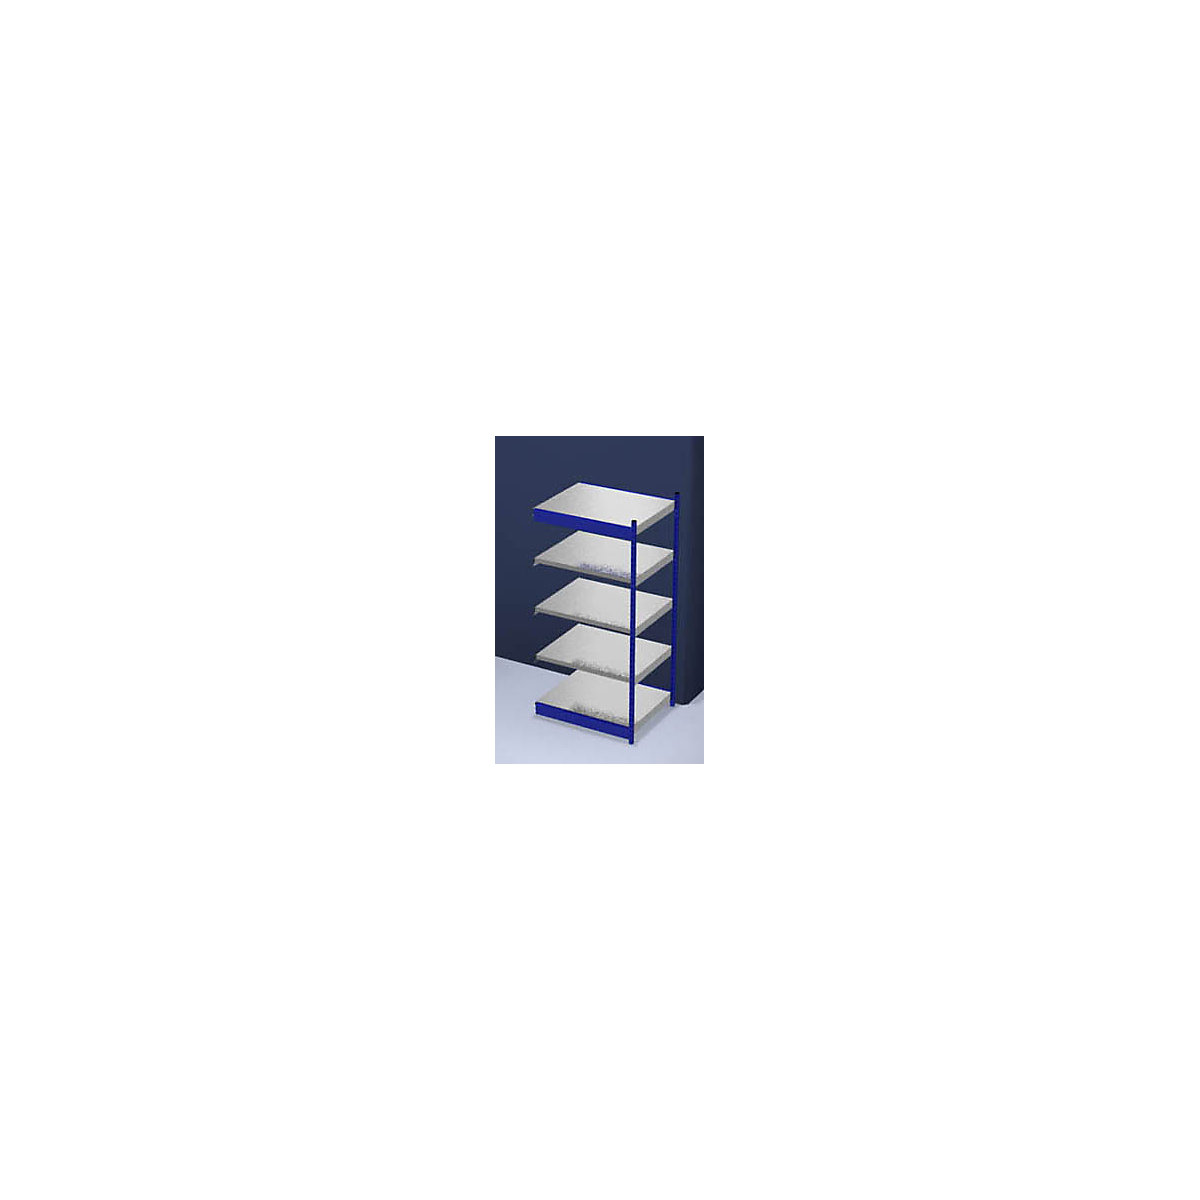 Stable boltless shelf unit, single sided – hofe, shelf unit height 2000 mm, blue / zinc-plated, shelf width 1025 mm, extension shelf unit, width x depth 1025 x 800 mm-9